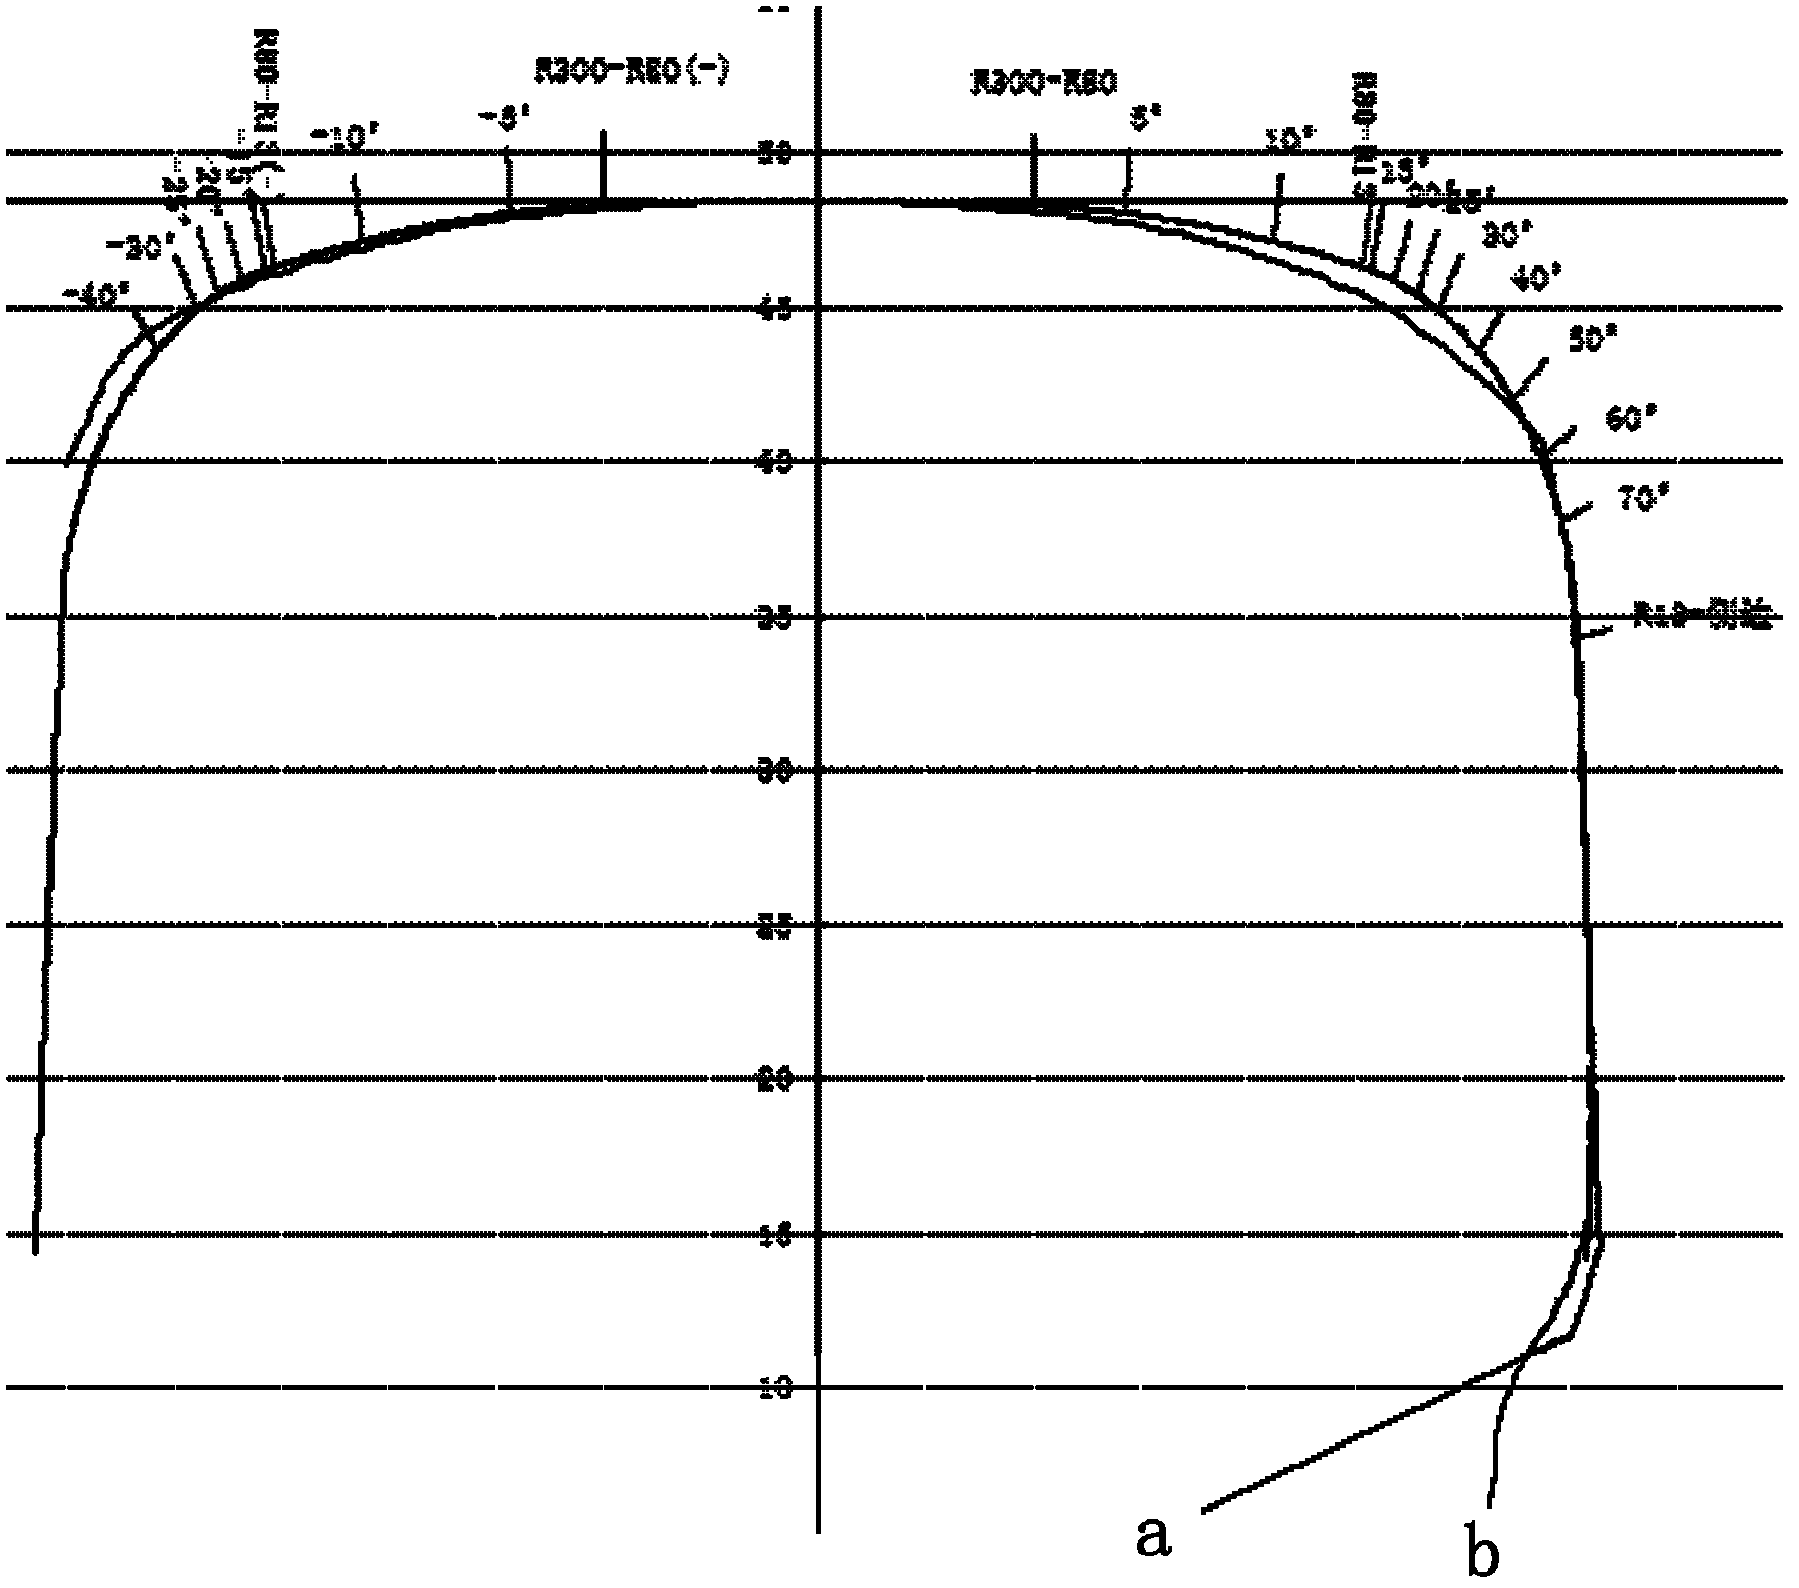 Rail outline detection method based on abrasion value